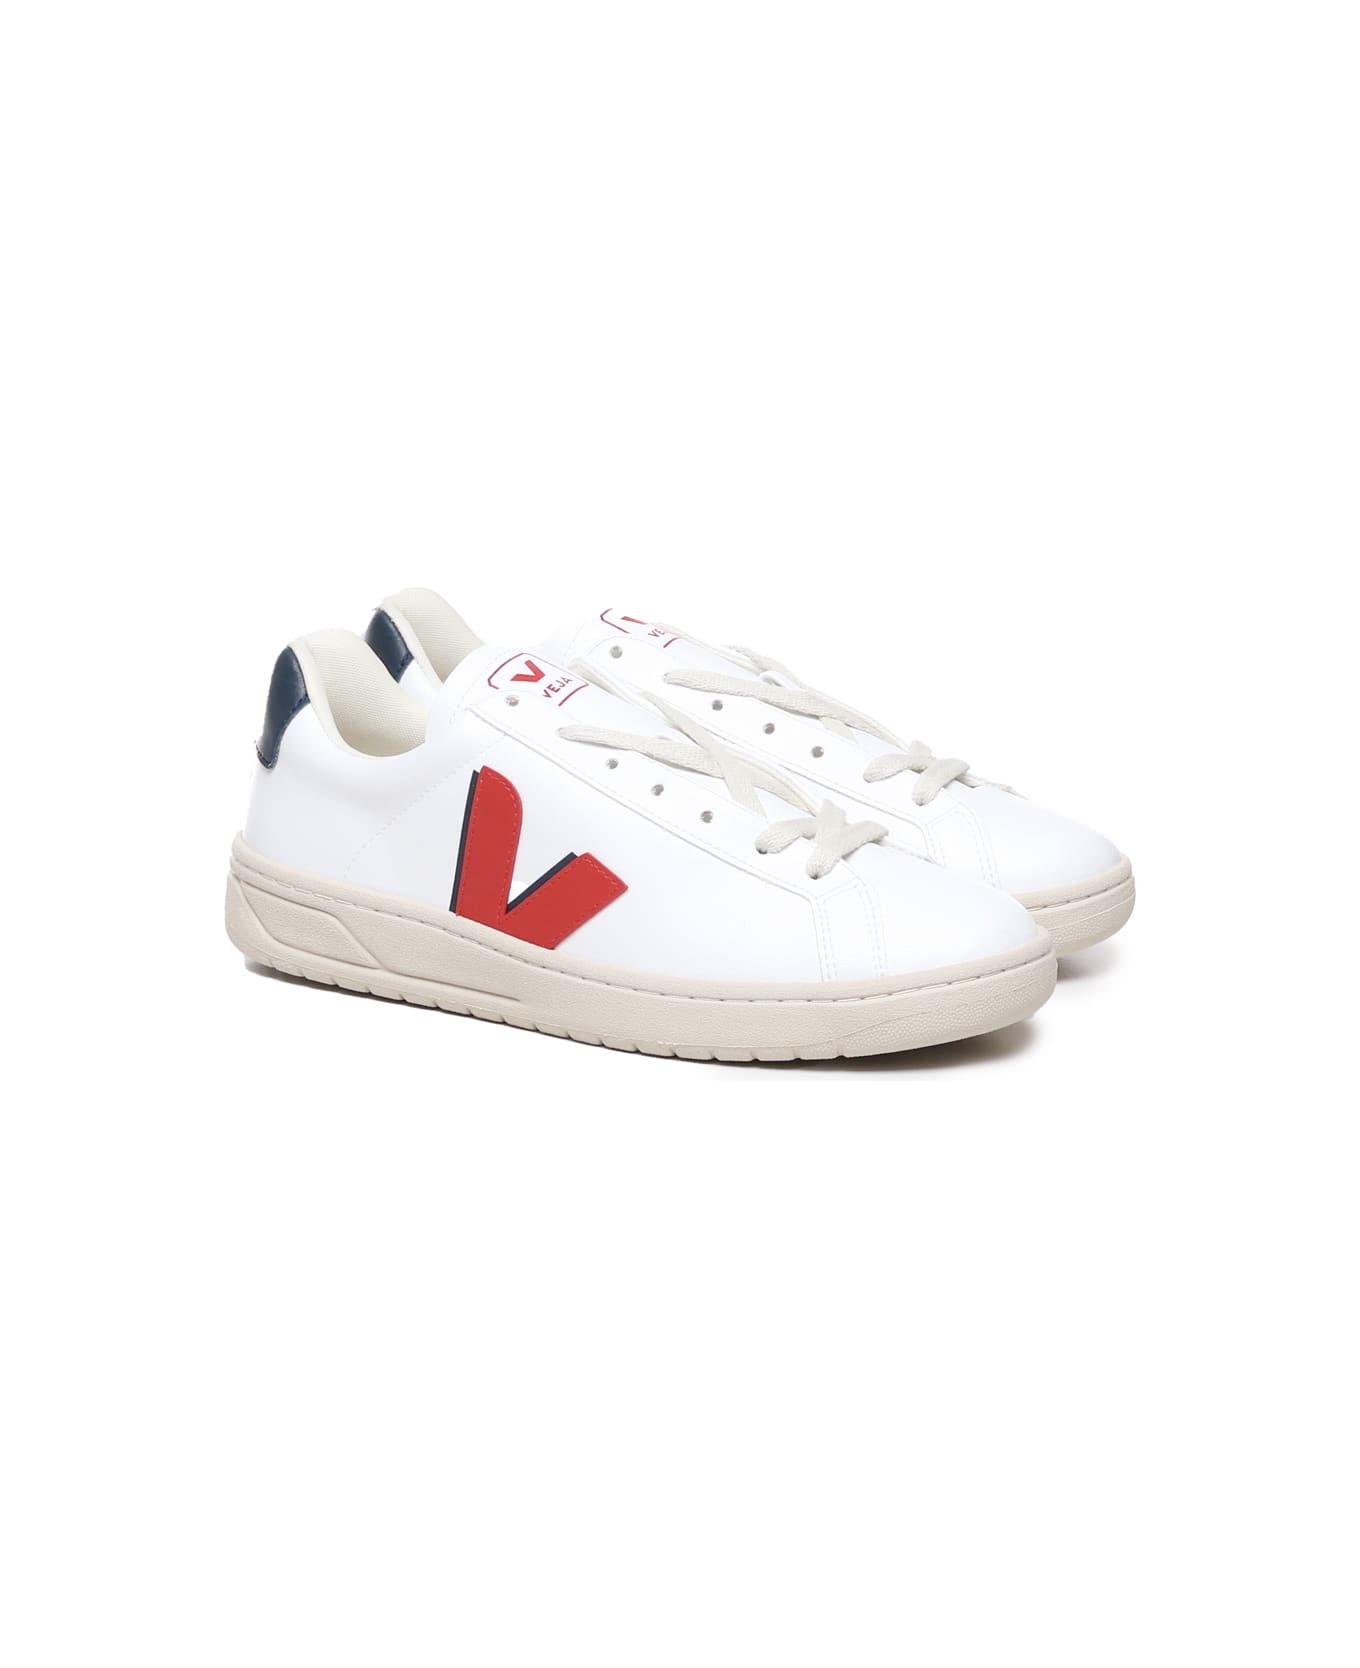 Veja Urca Cwl Sneakers - White, blue, red